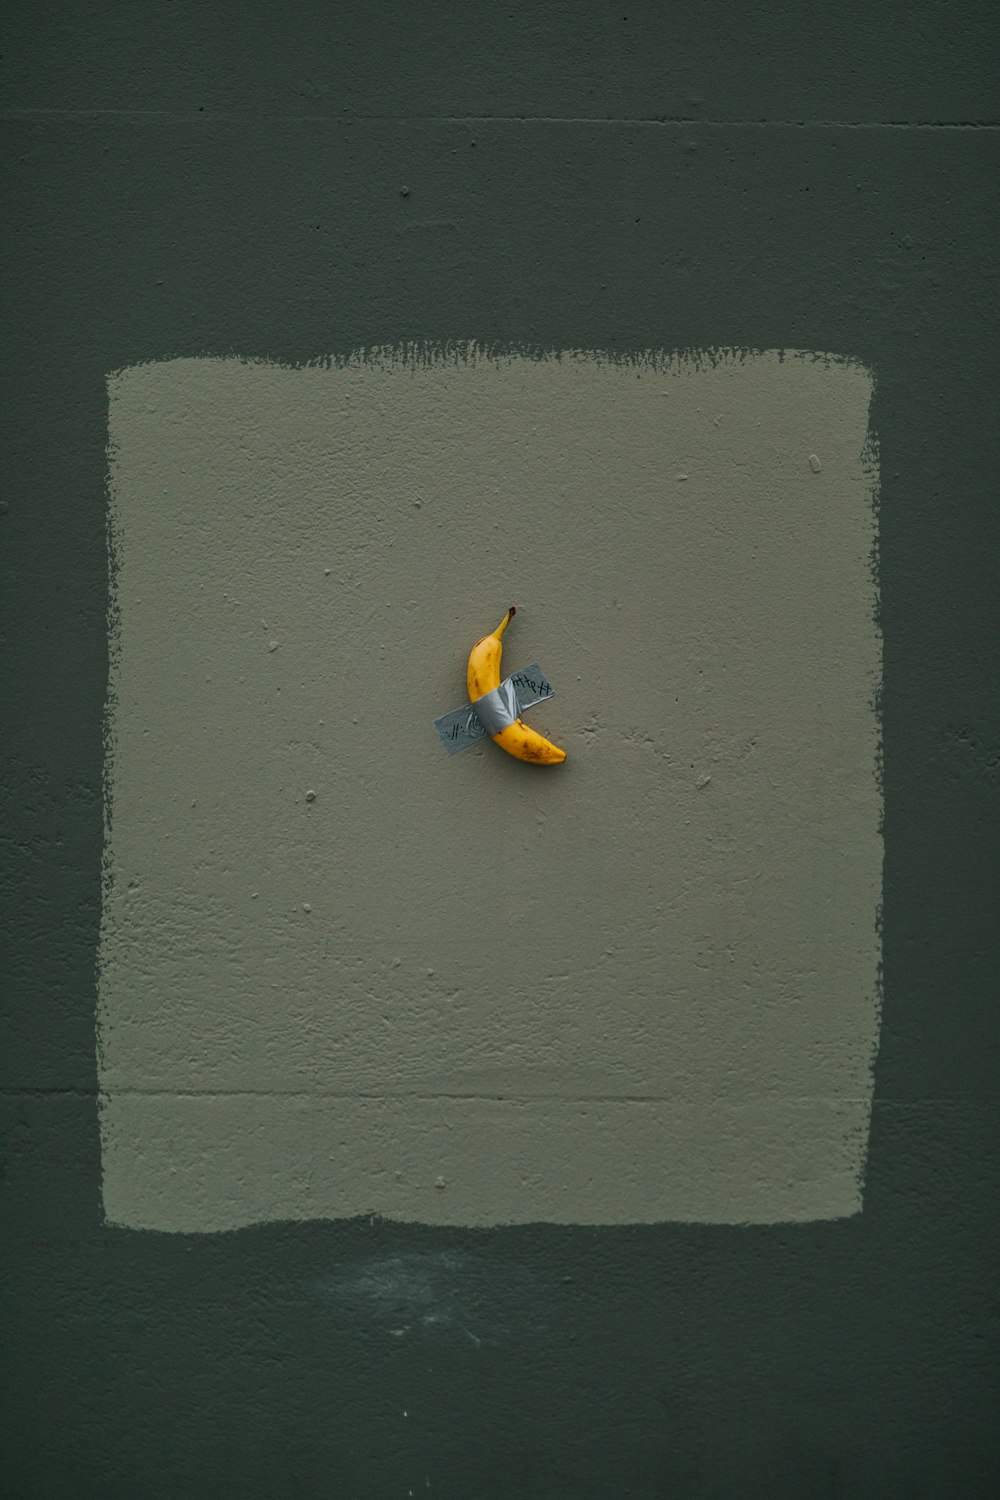 yellow banana fruit with tape